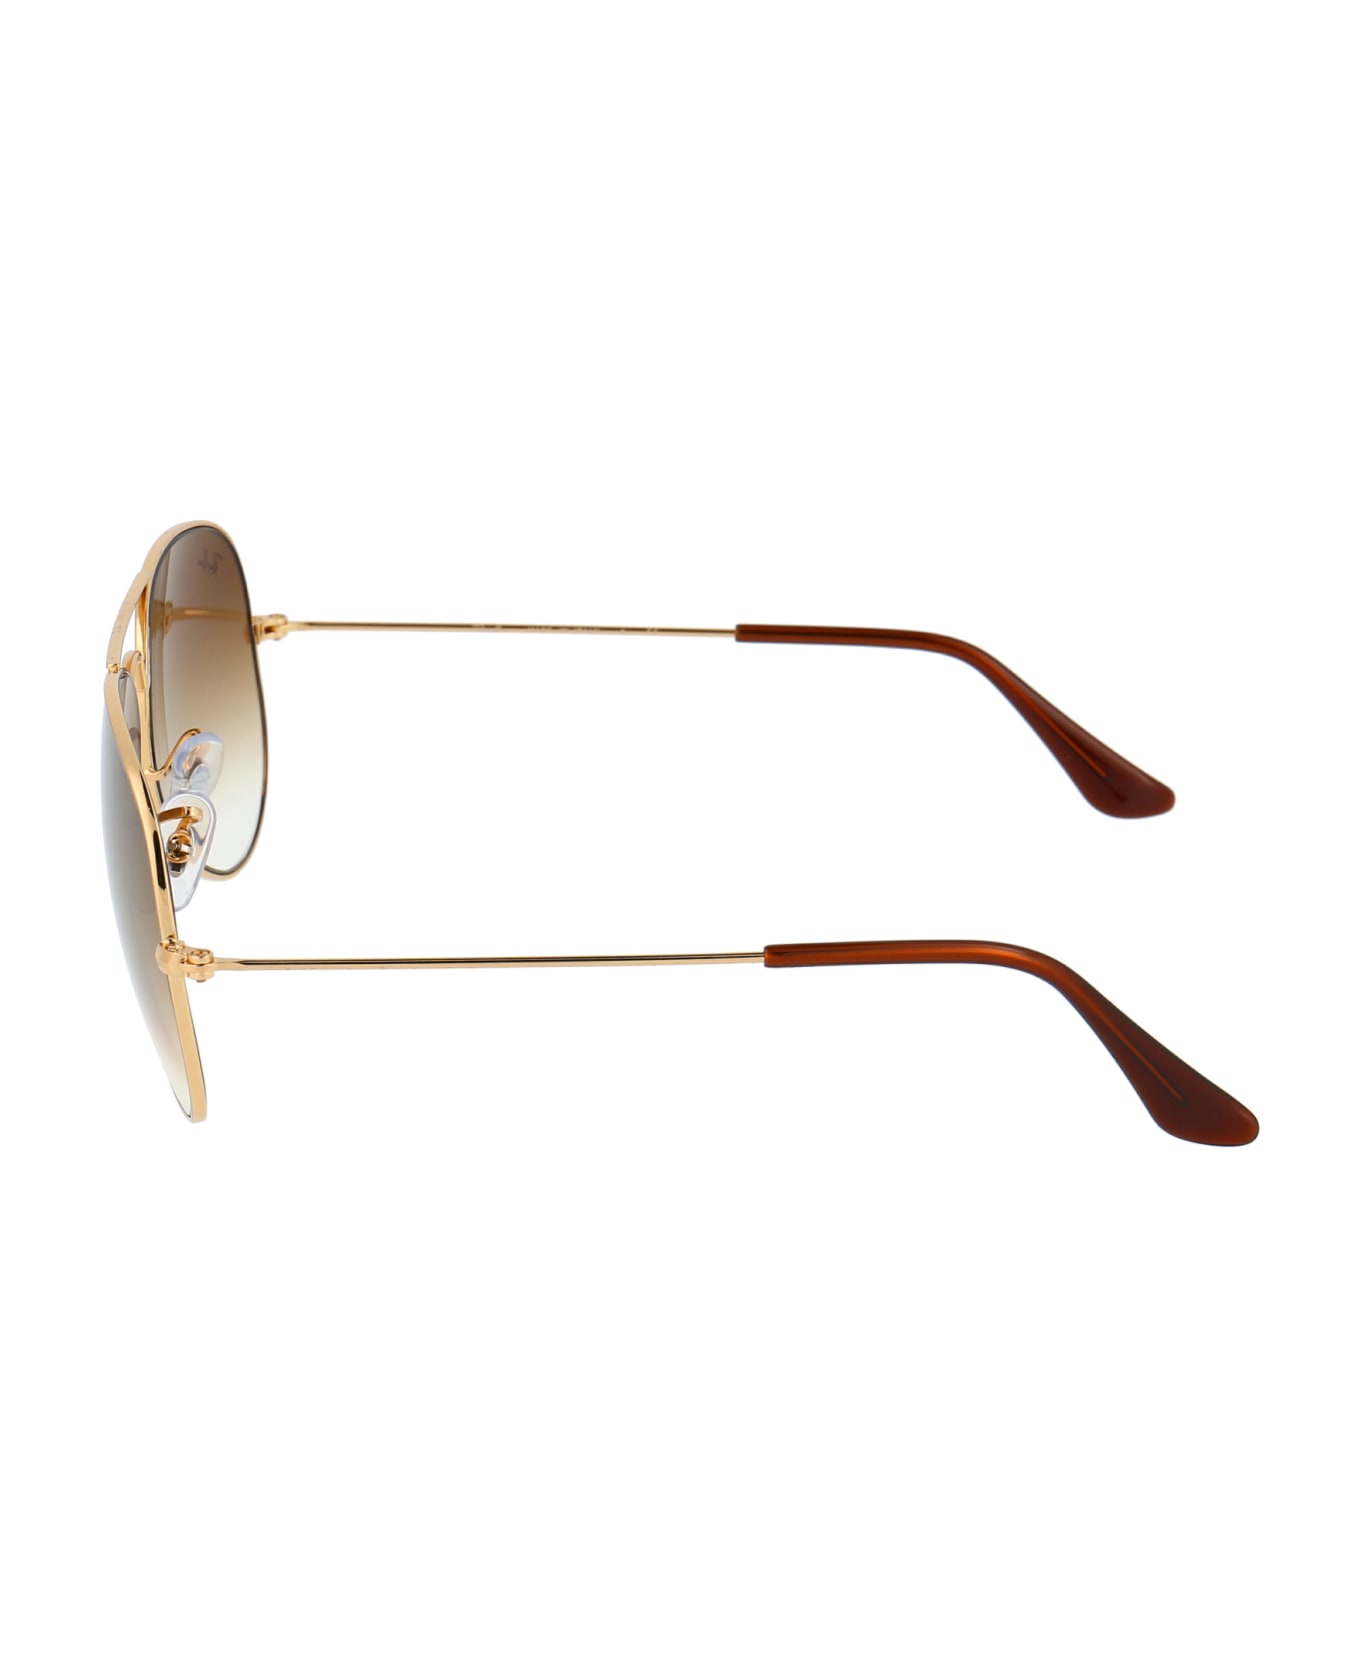 Ray-Ban Aviator Sunglasses - 001/51 GOLD